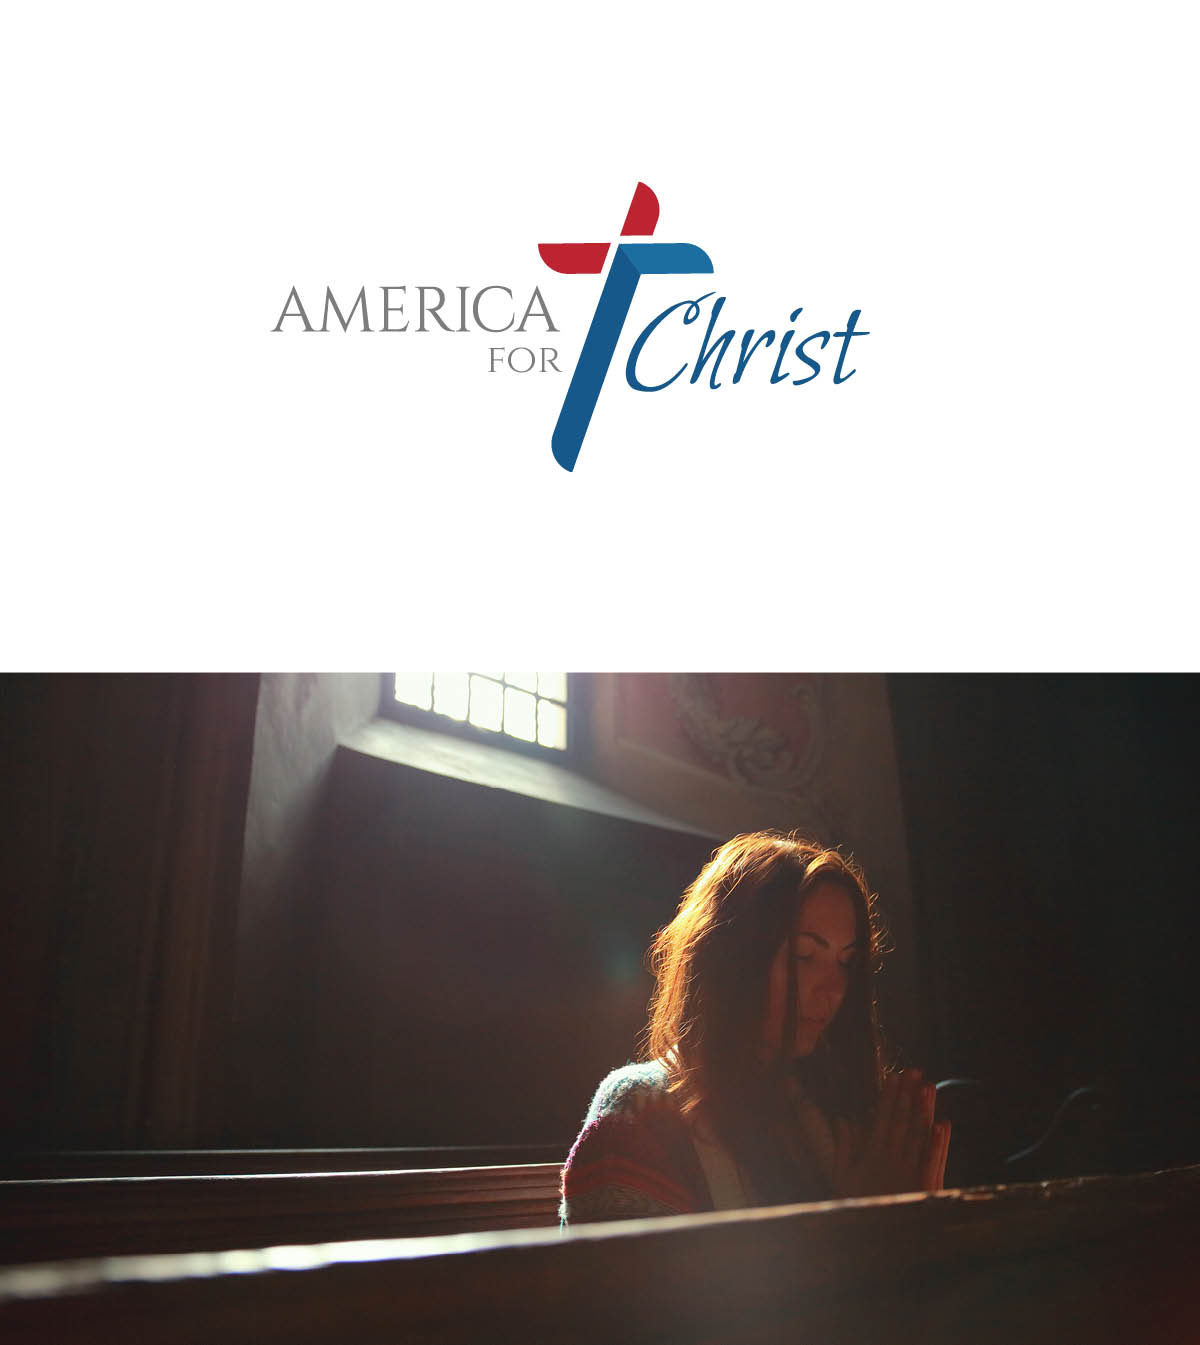 America for Christ